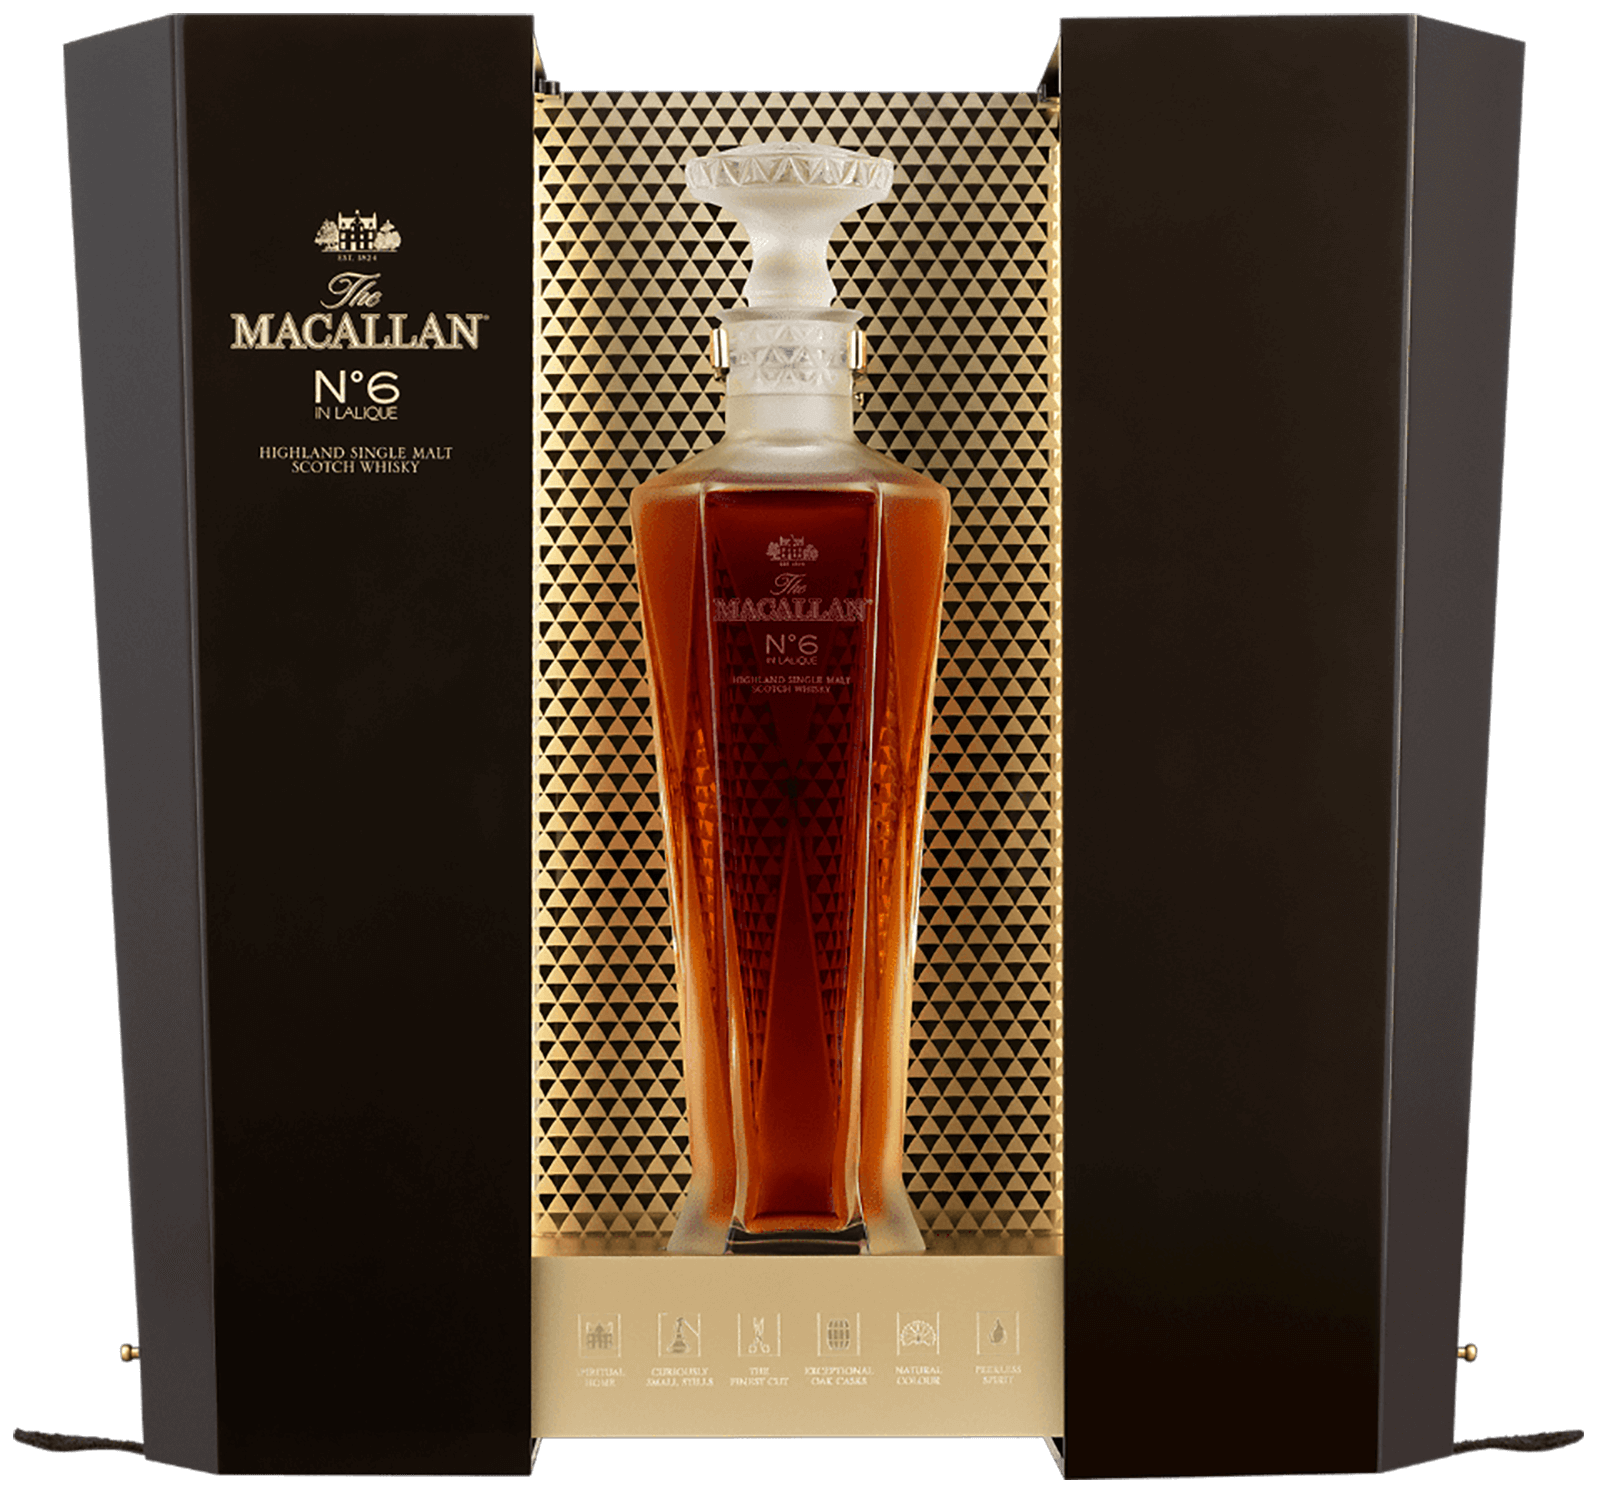 Macallan №6 Highland single malt scotch whisky (gift box) royal brackla 12 y o highland single malt scotch whisky gift box